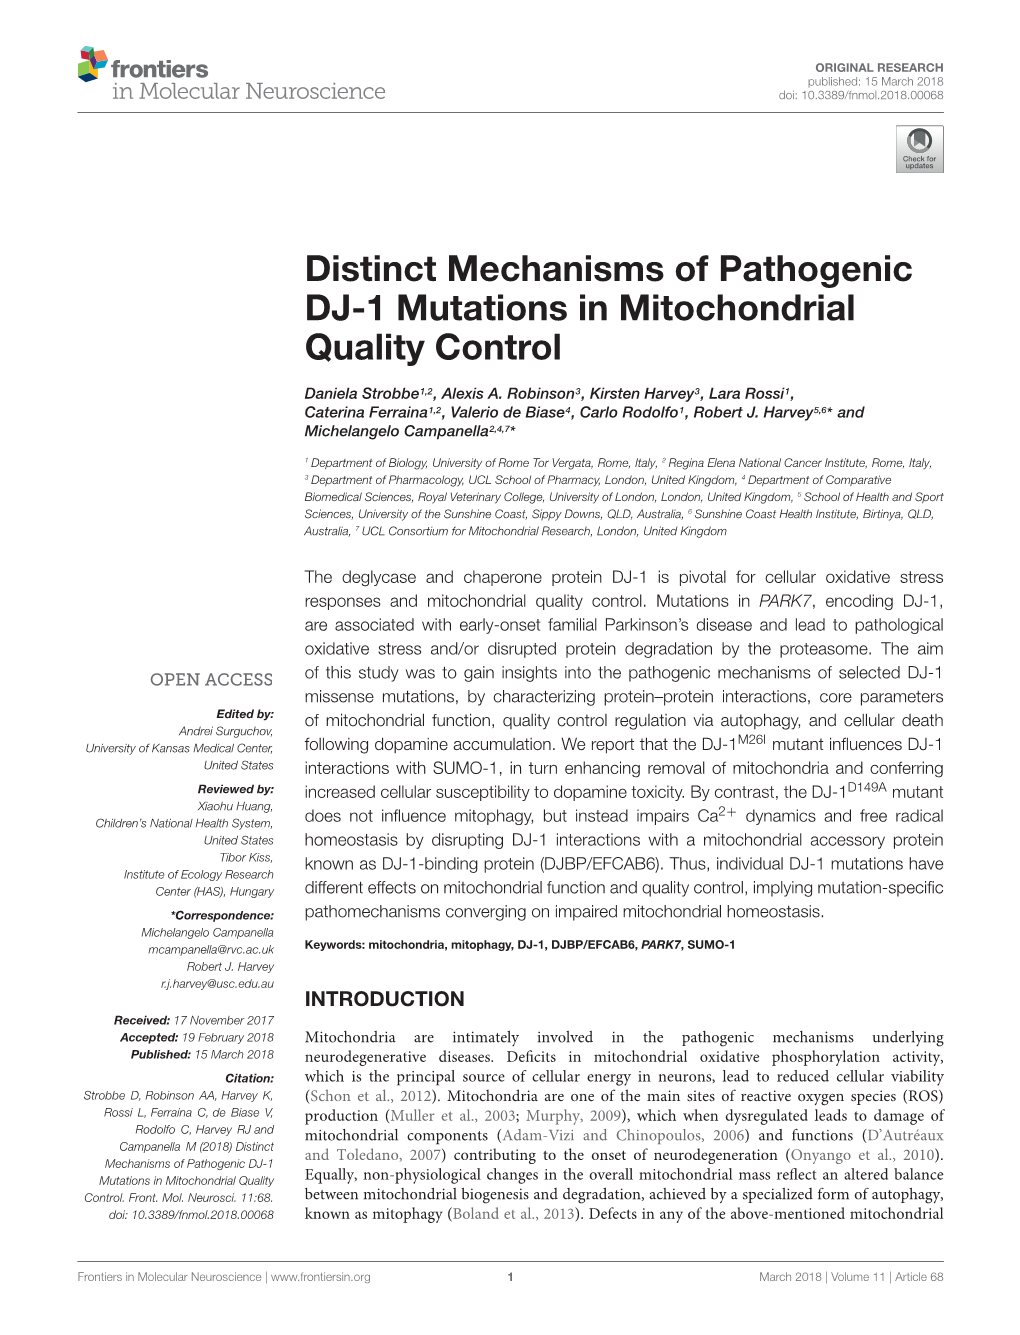 Distinct Mechanisms of Pathogenic DJ-1 Mutations in Mitochondrial Quality Control